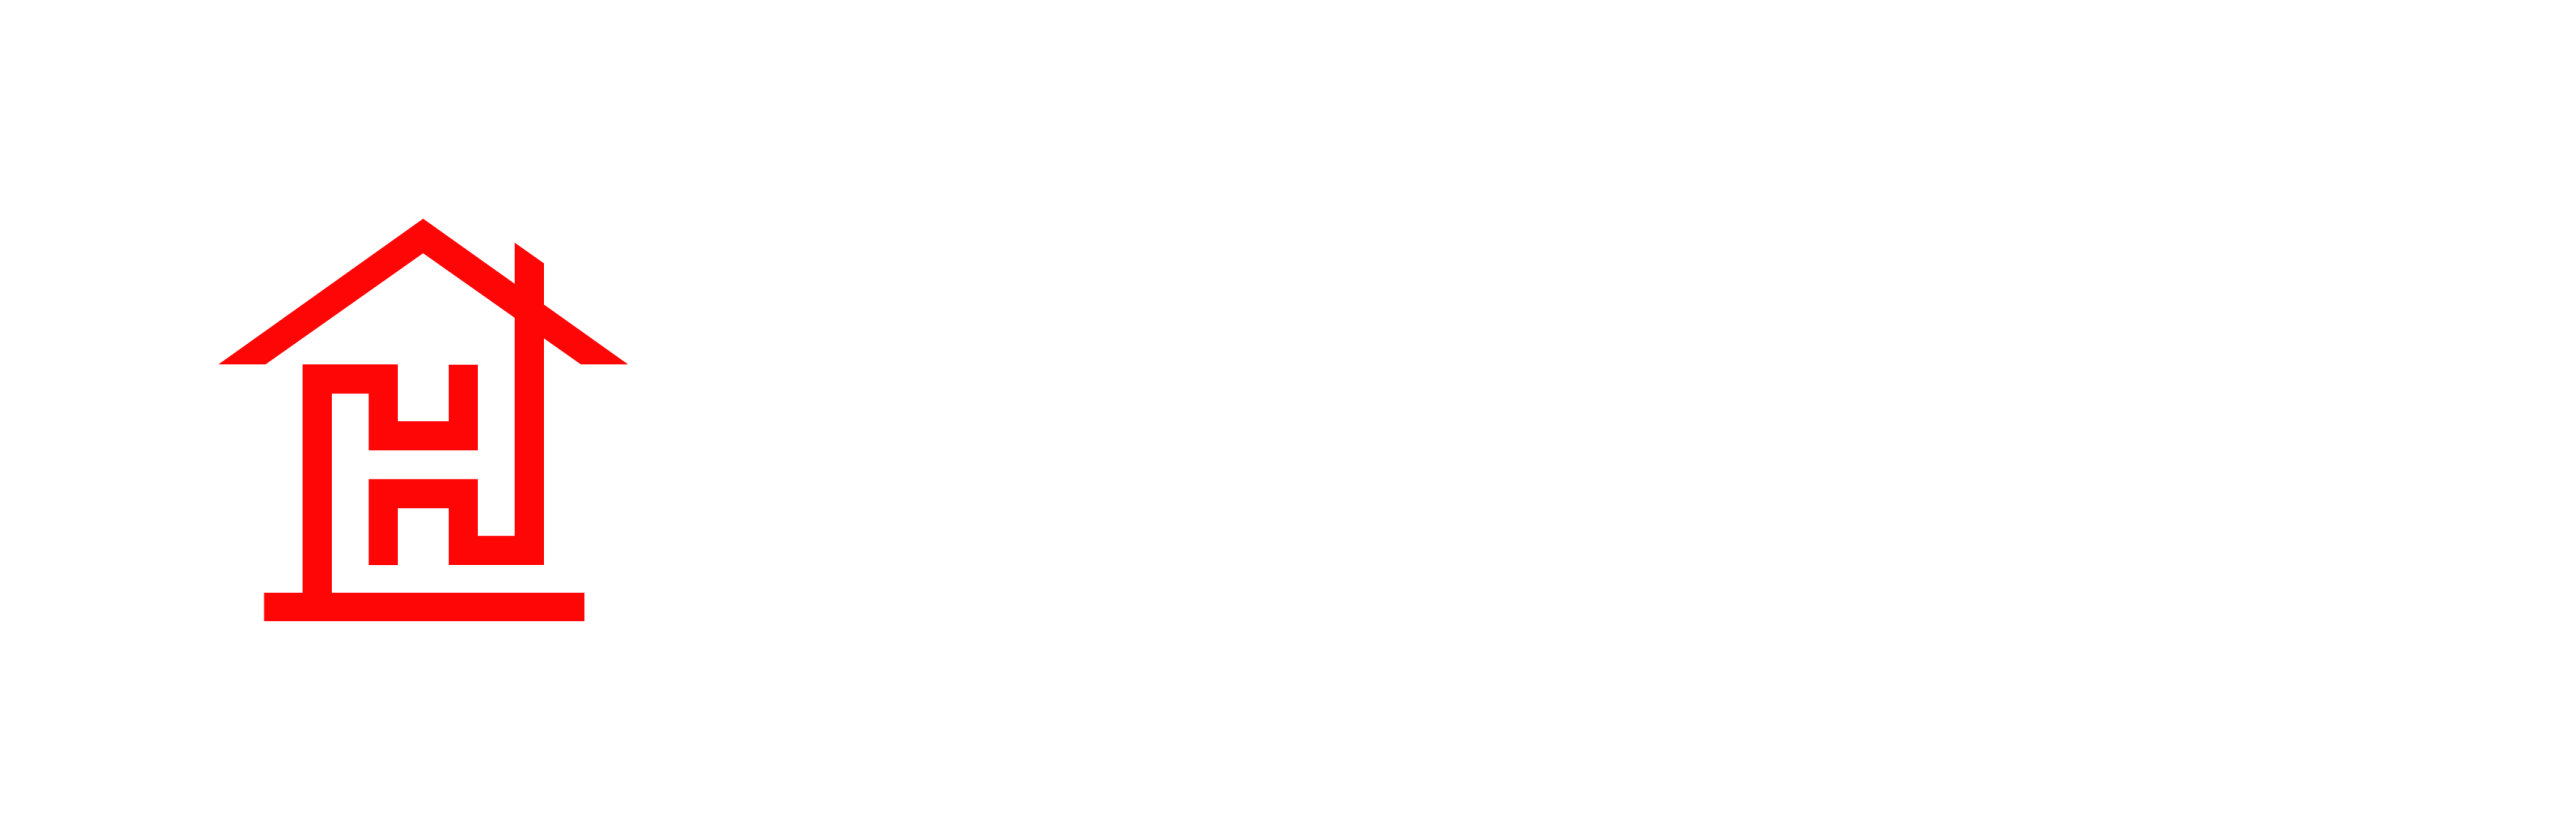 Harrison Coe Property